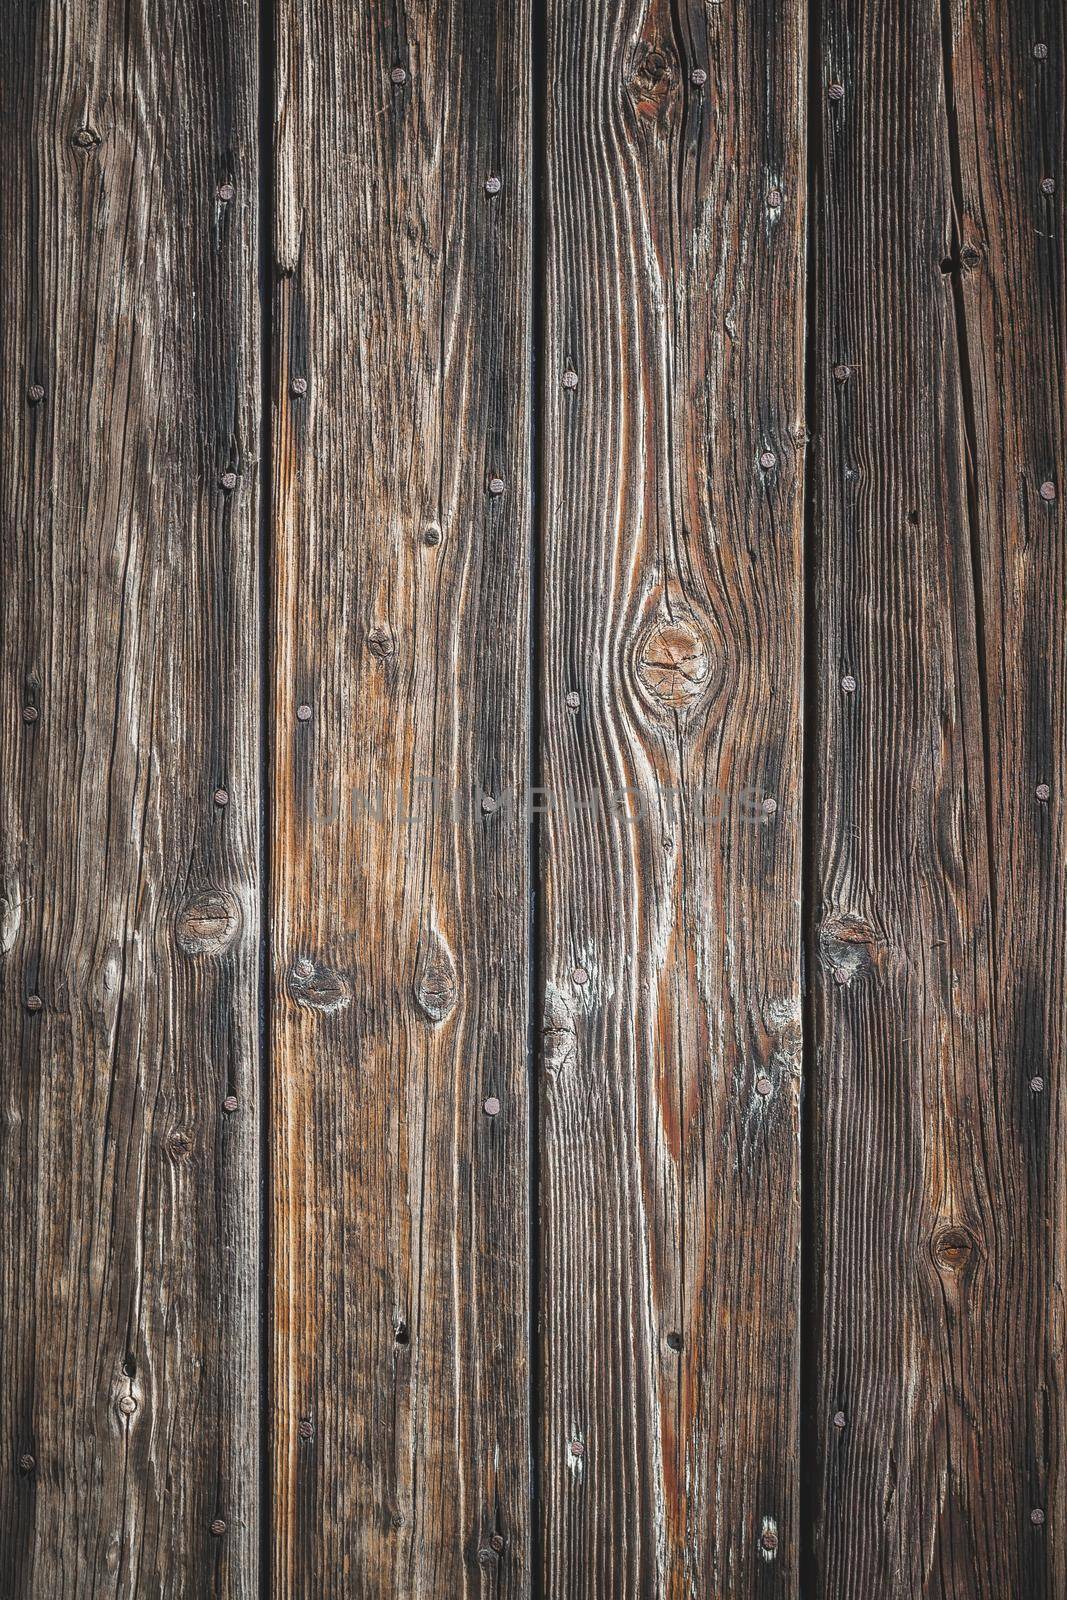 Vintage wood background. Brown wood planks texture or background.